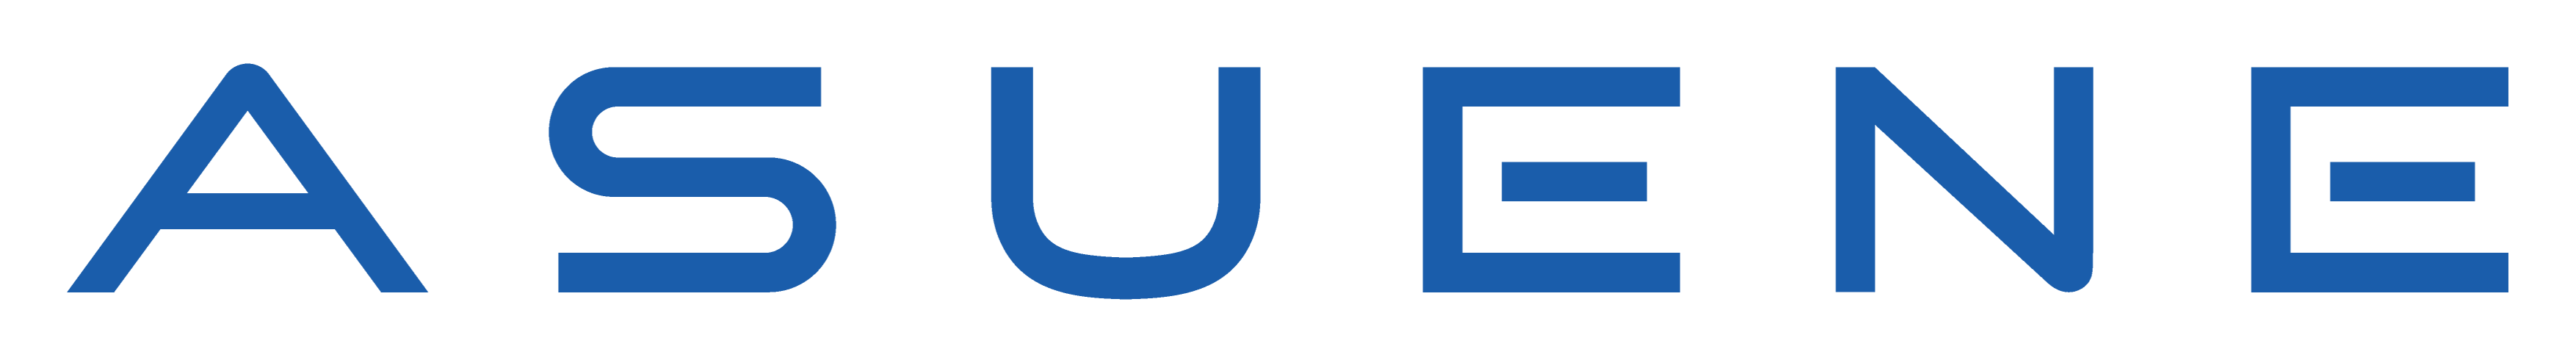 Asuene Inc. Logo